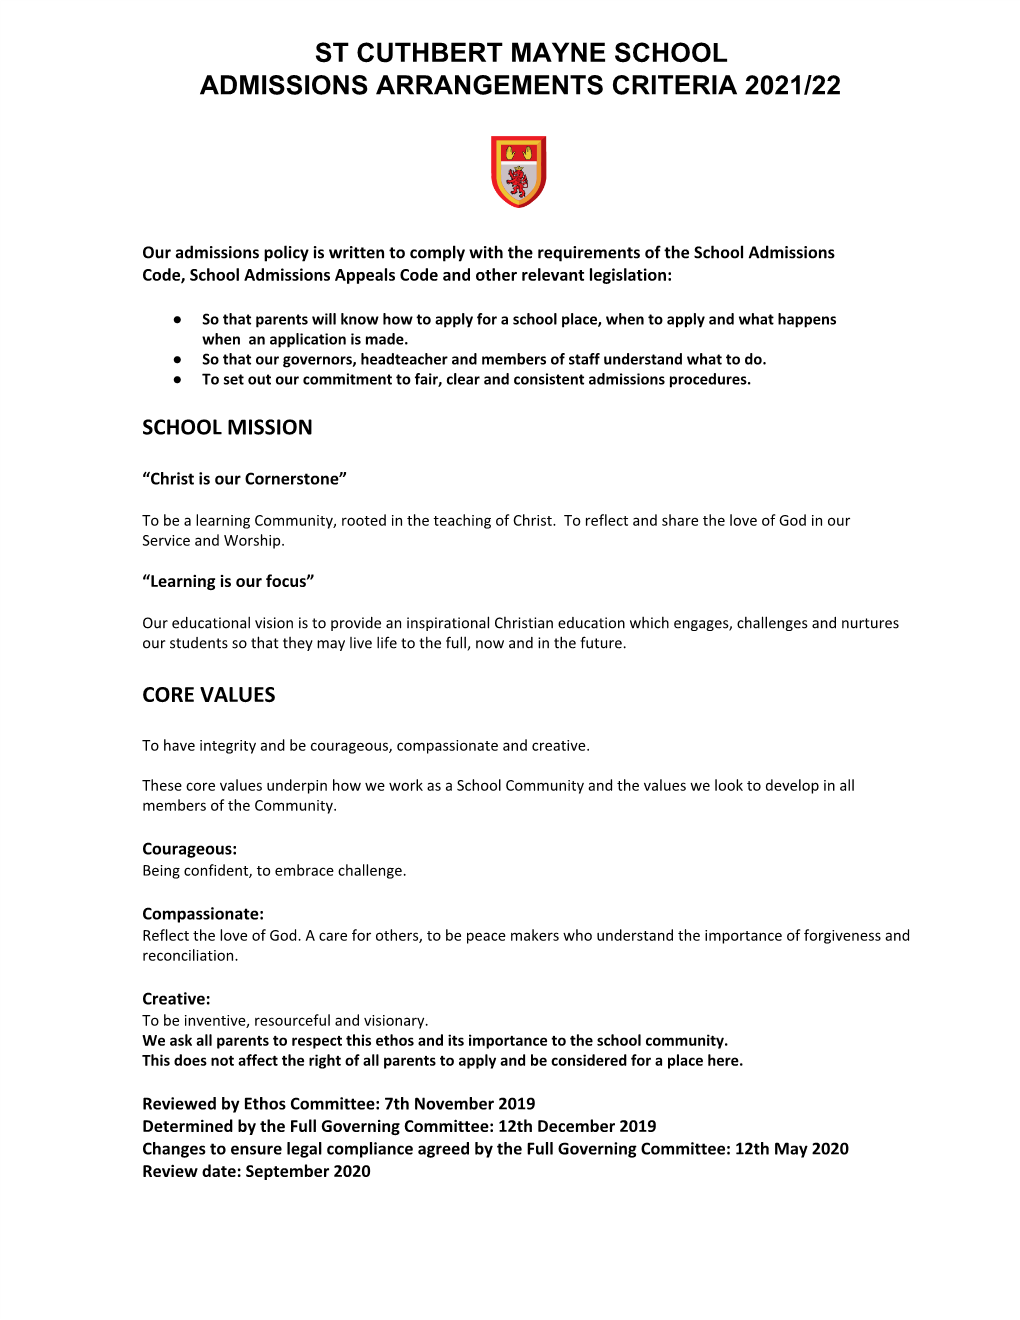 St Cuthbert Mayne School Admissions Arrangements Criteria 2021/22